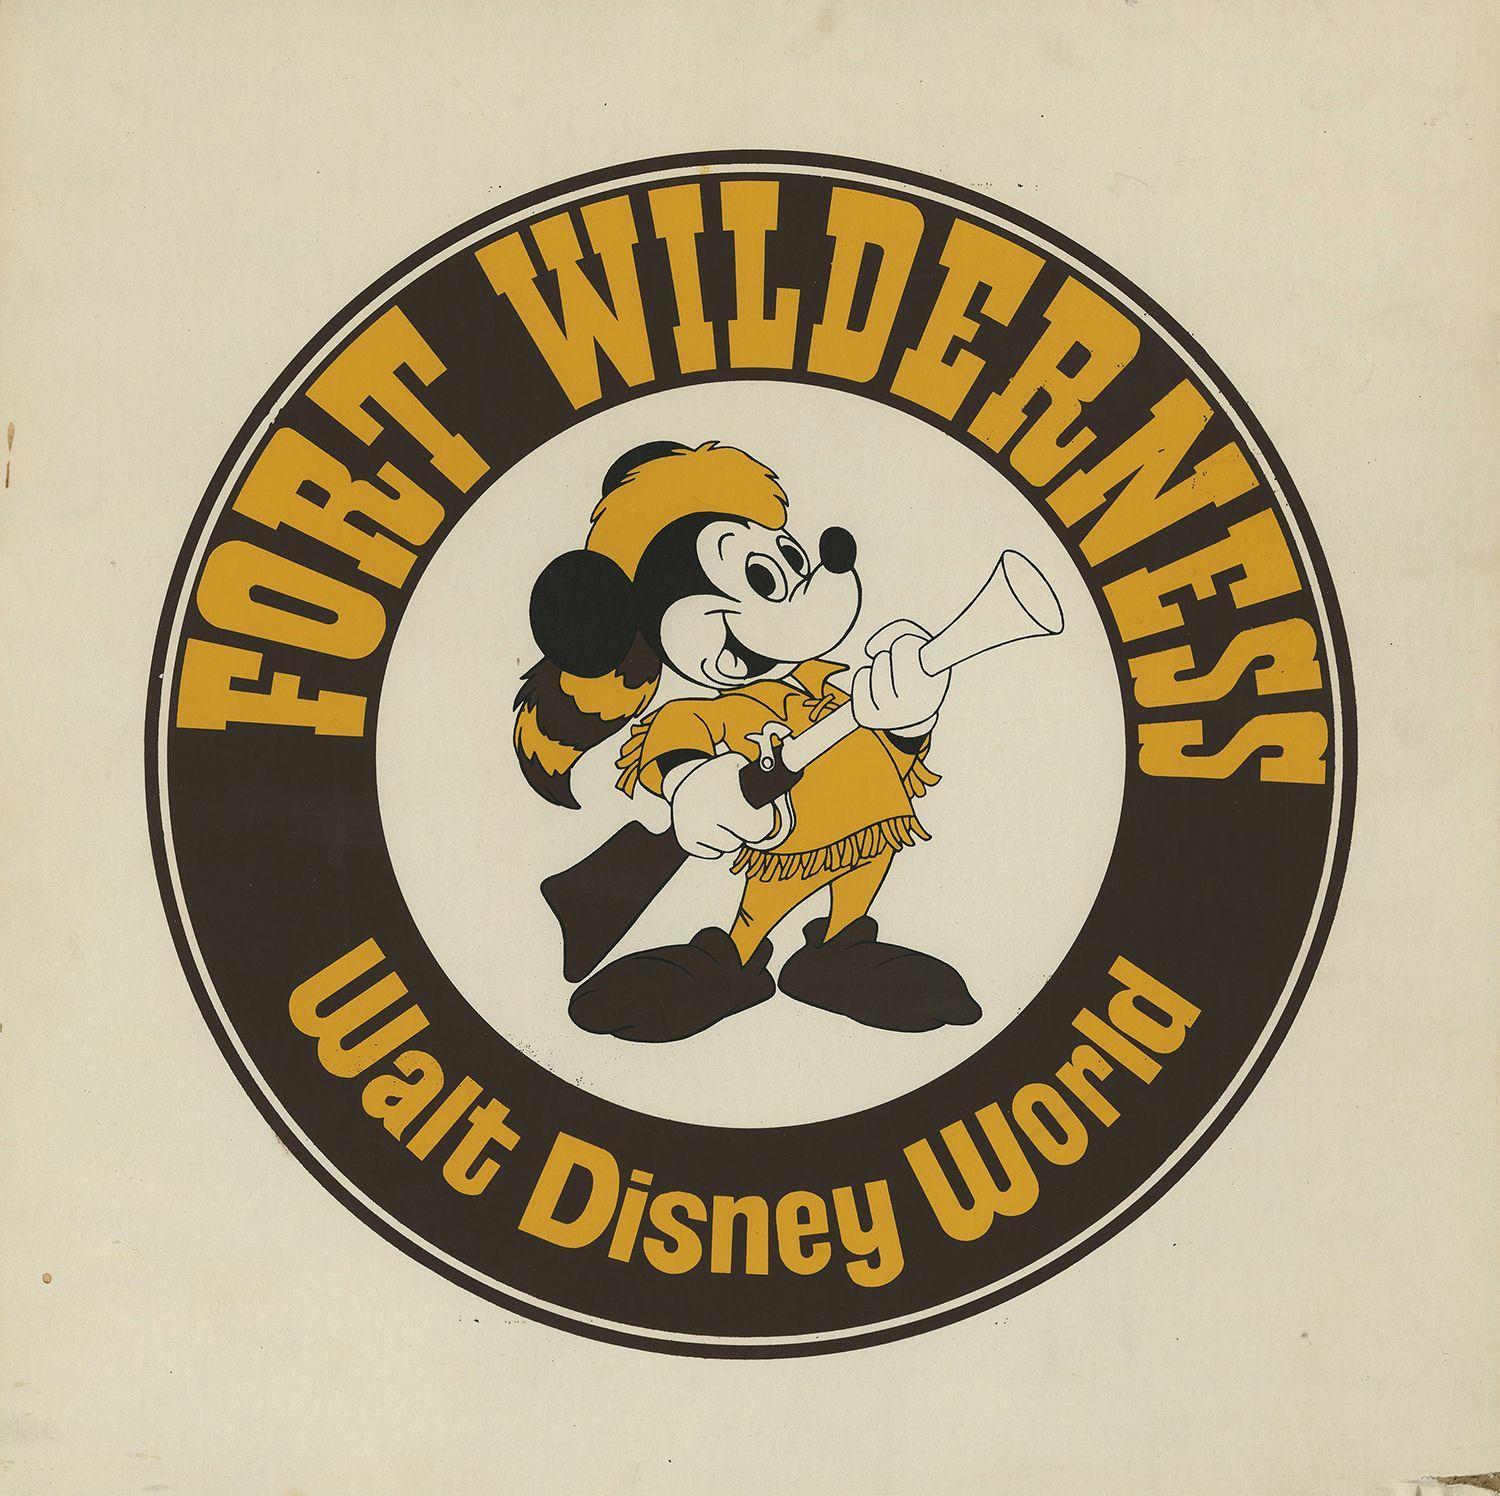 Original Walt Disney World Logo - This Is An Original Silk Screened Sign For Walt Disney World's Fort